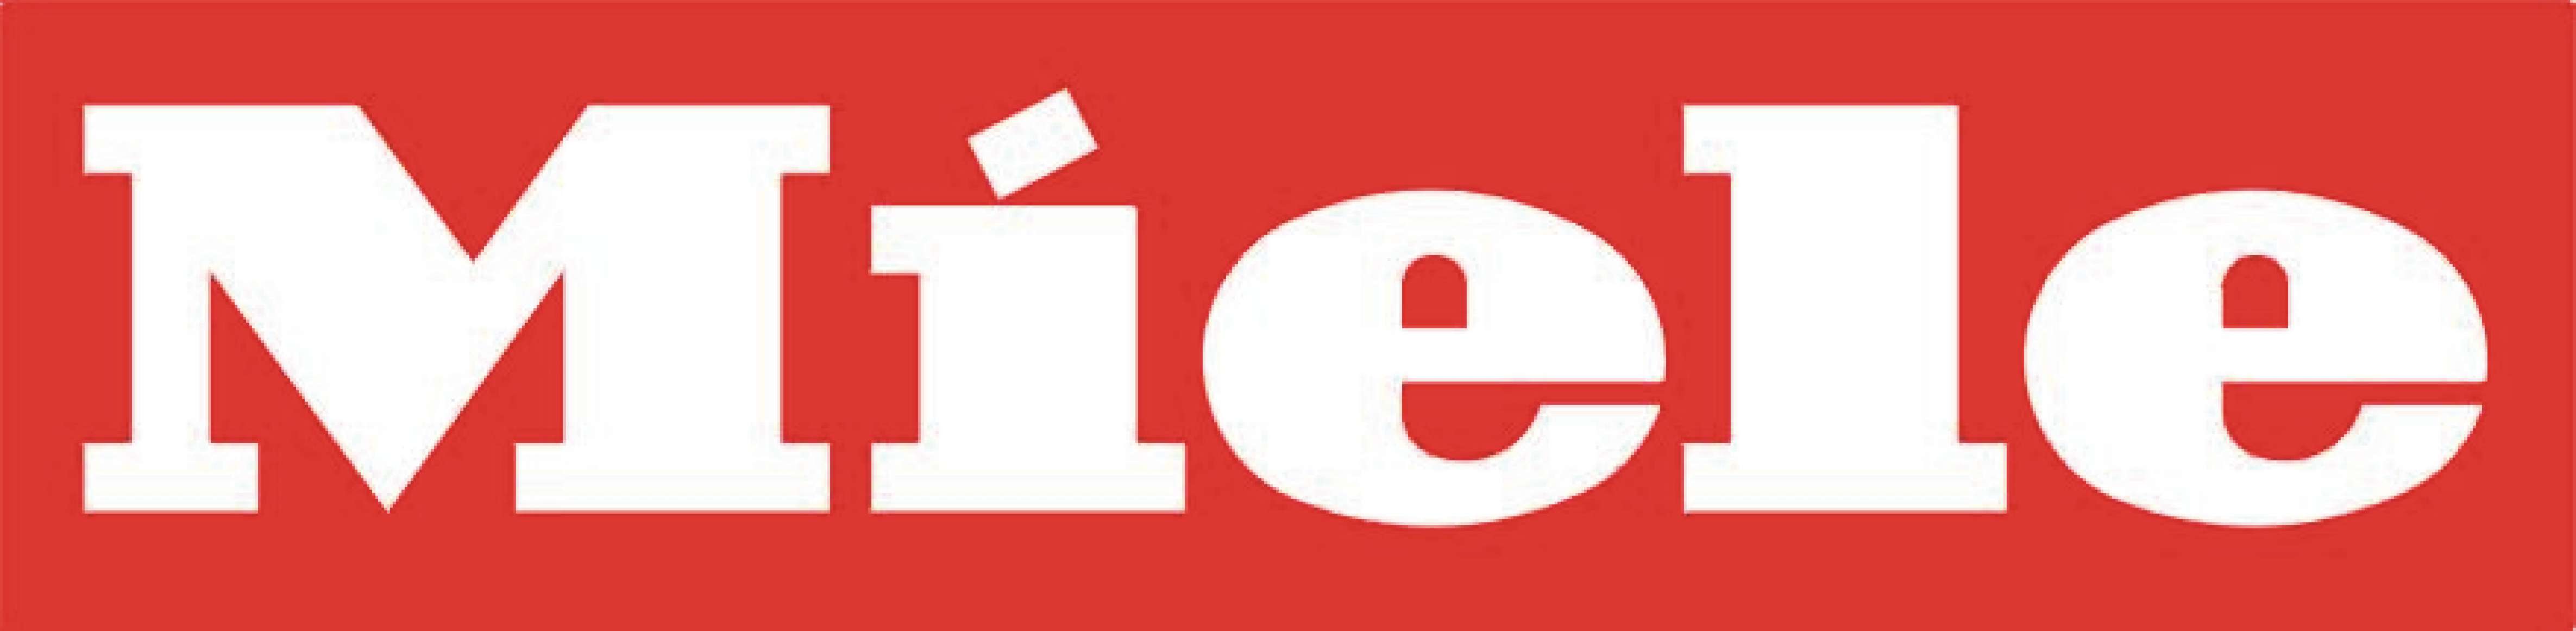 Migle Logo photo - 1